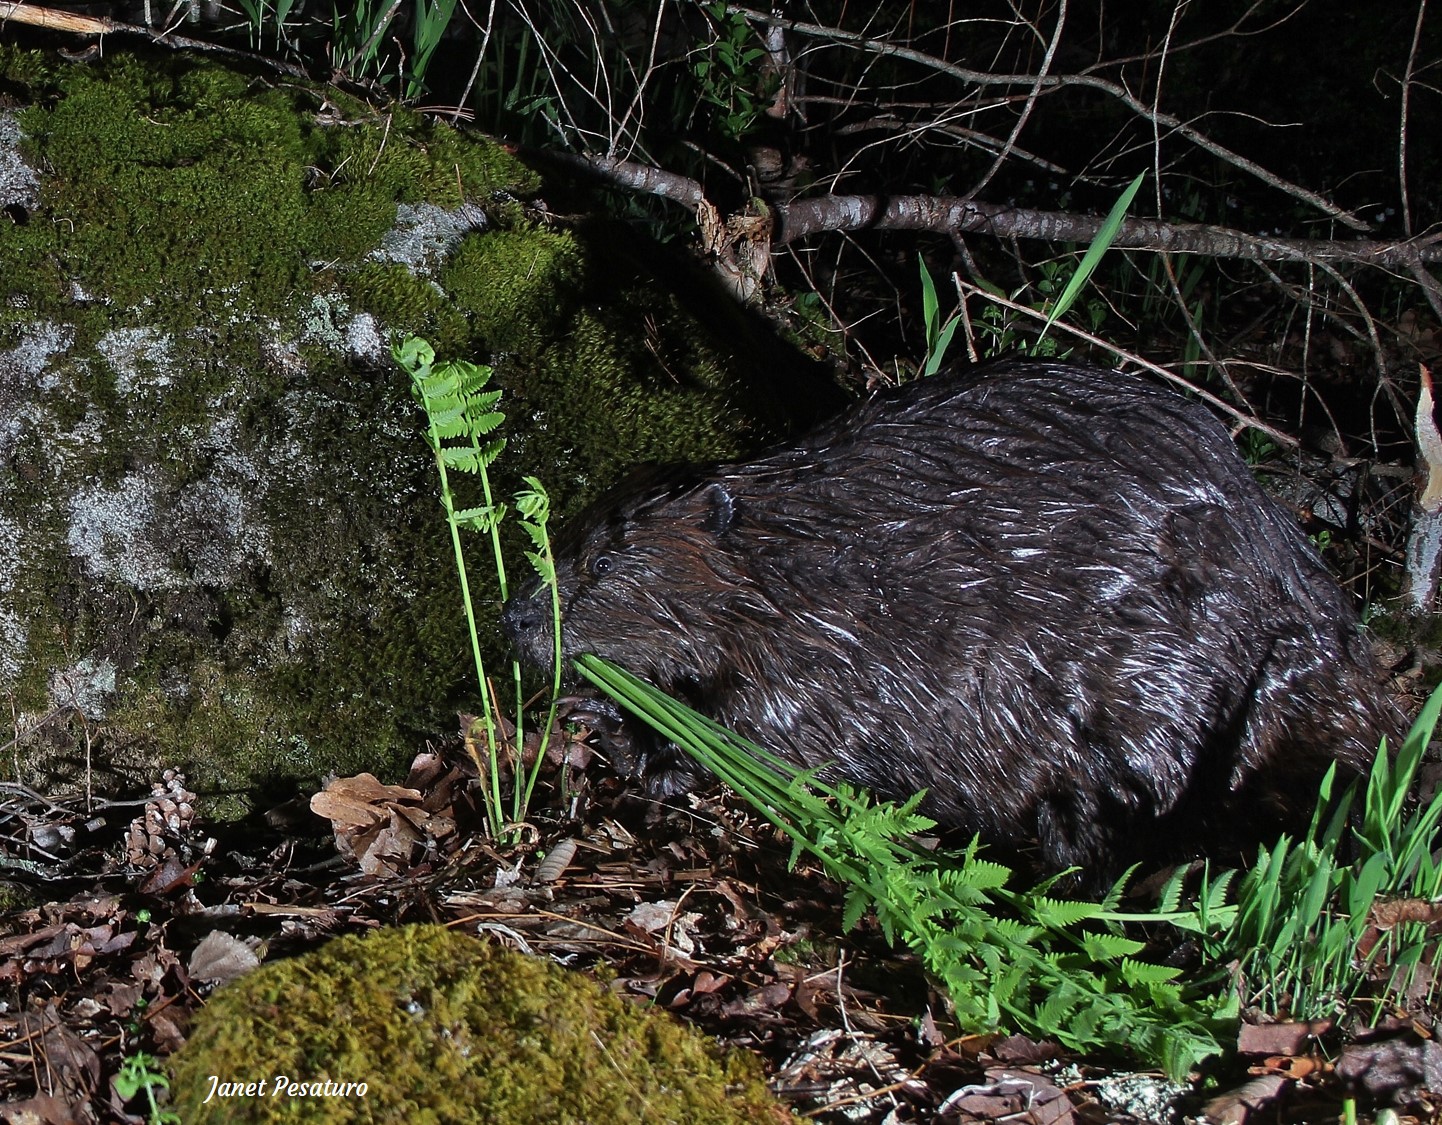 in study of beaver food and feeding habits I found beavers eat ferns